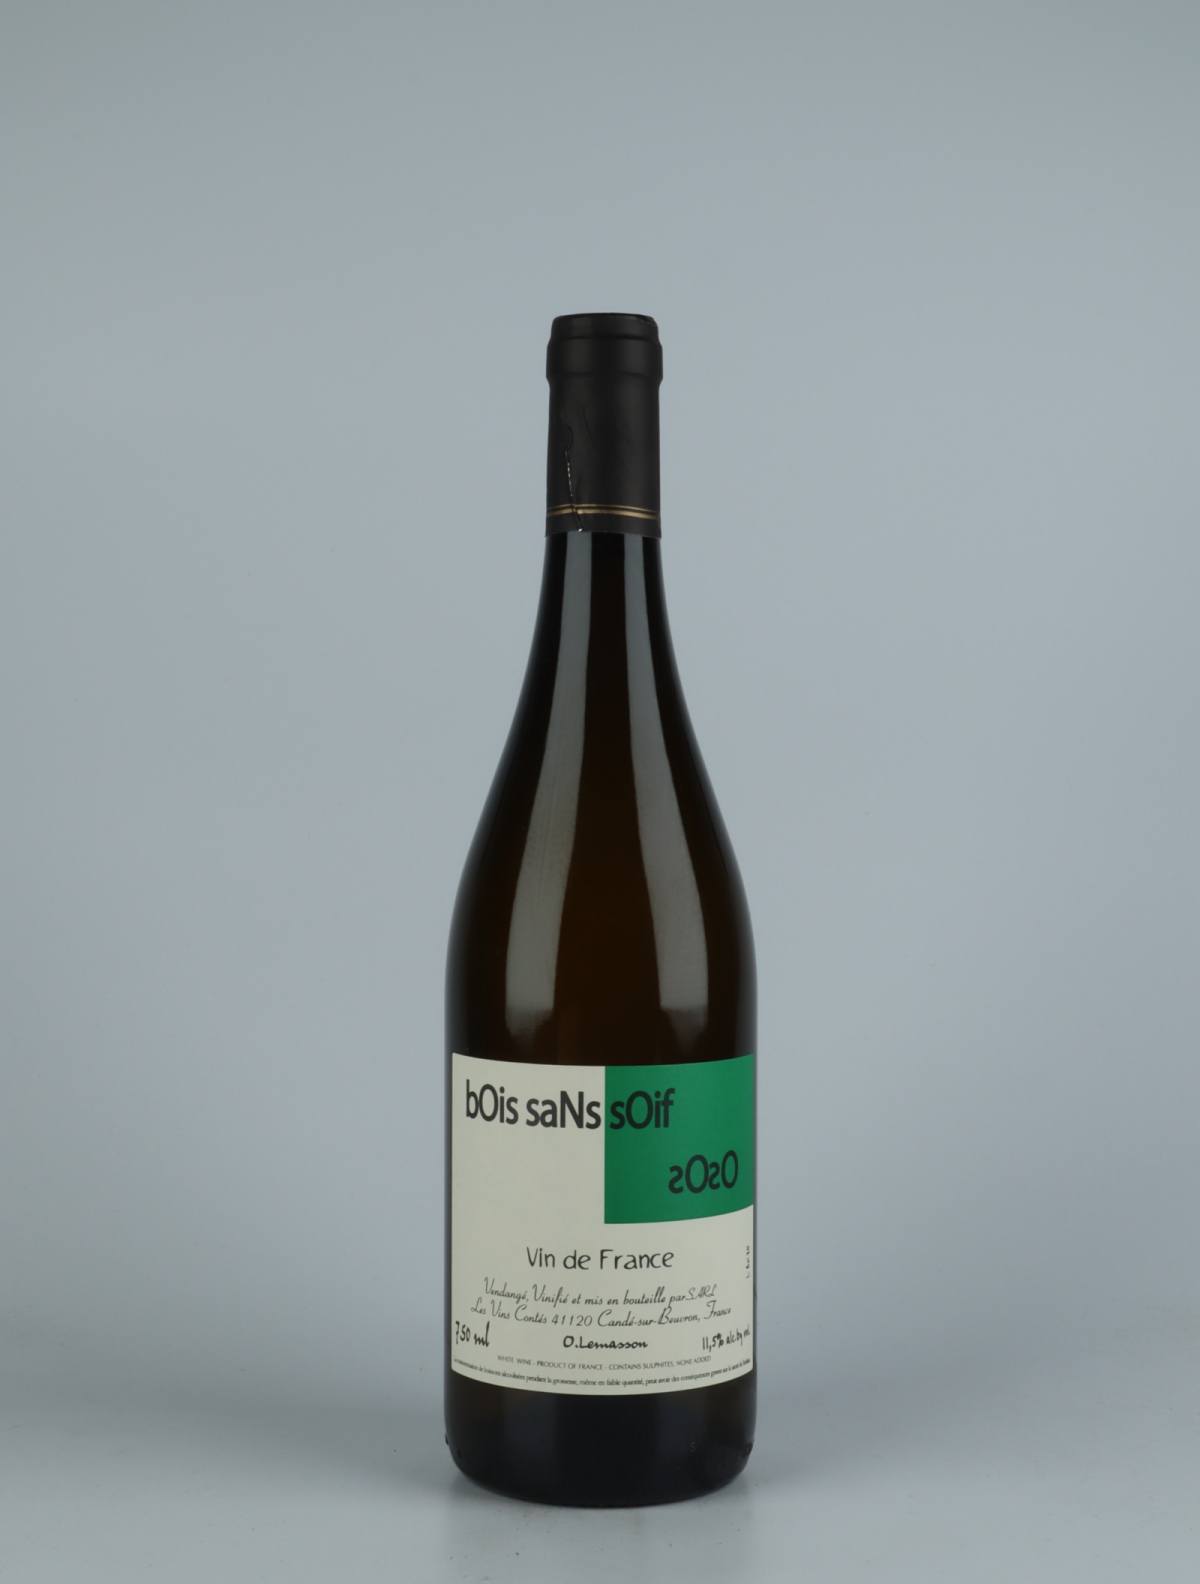 A bottle 2020 Bois sans Soif White wine from Olivier Lemasson, Loire in France